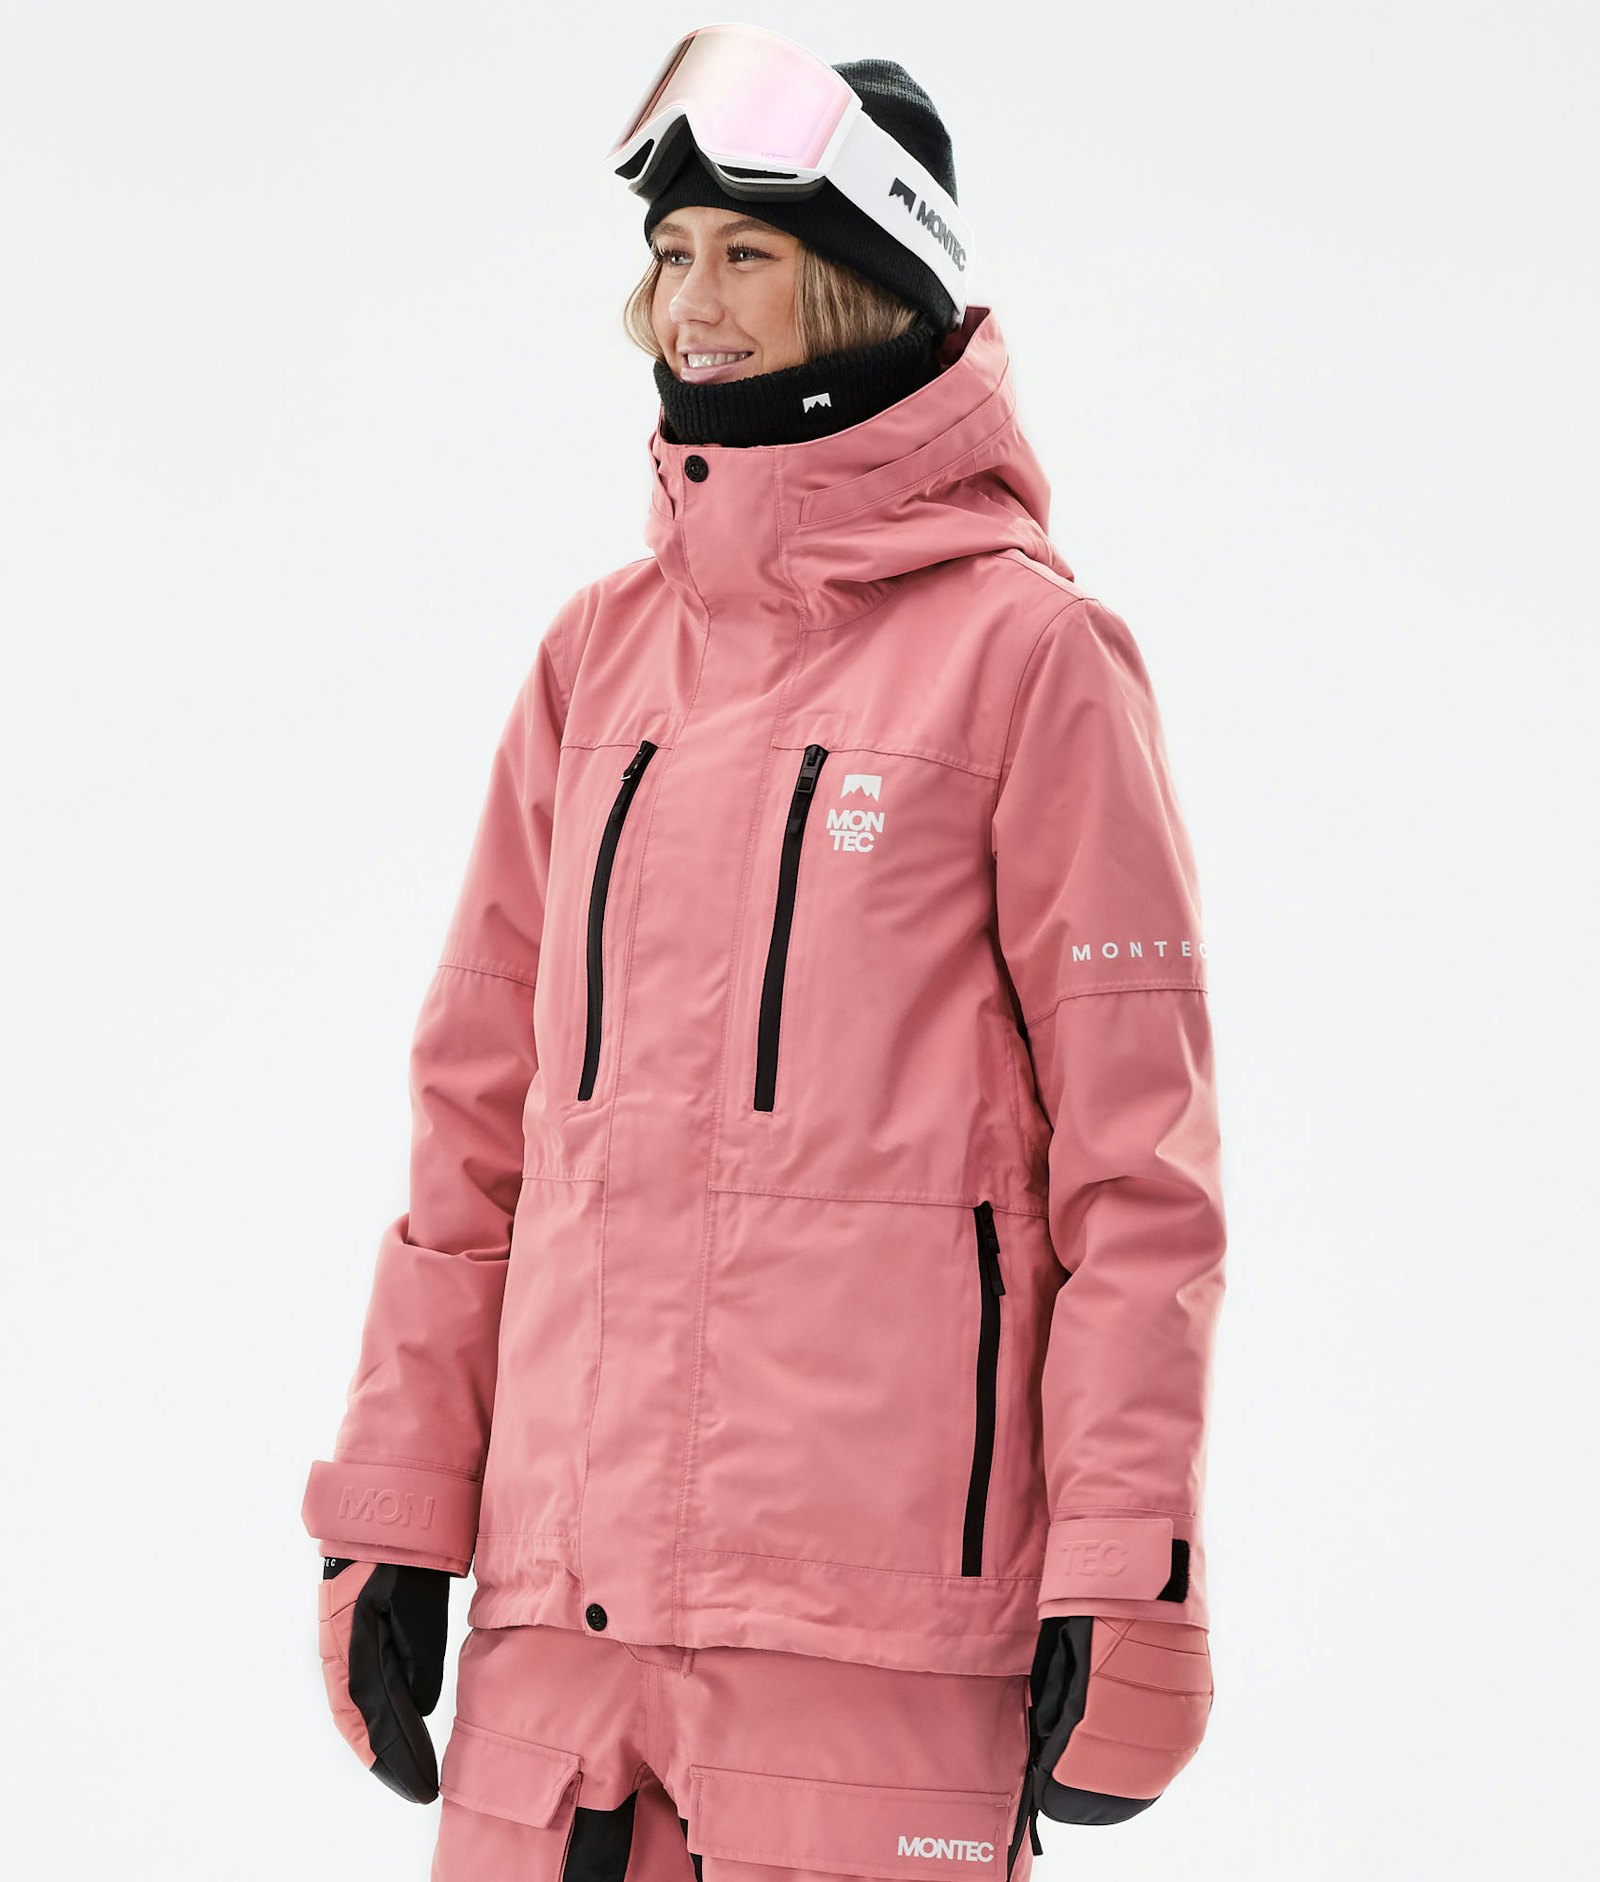 Fawk W 2021 Veste de Ski Femme Pink